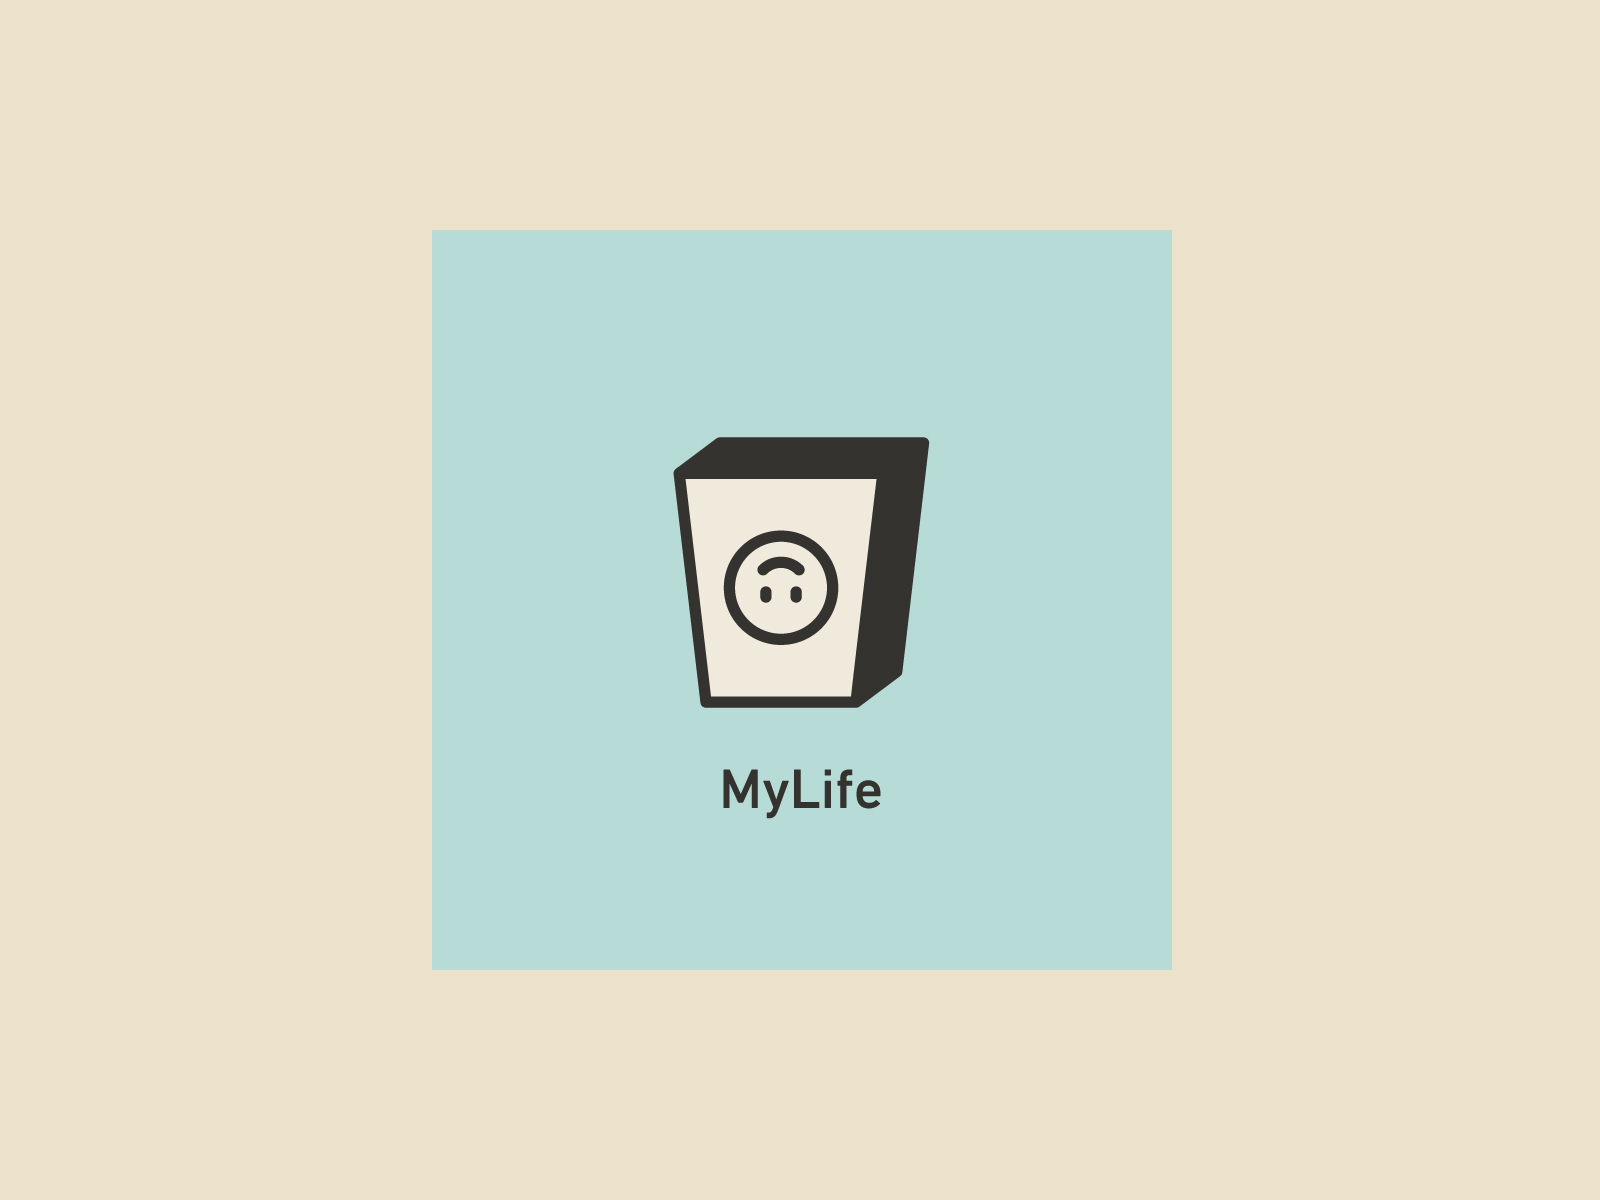 Timelapse of MyLife